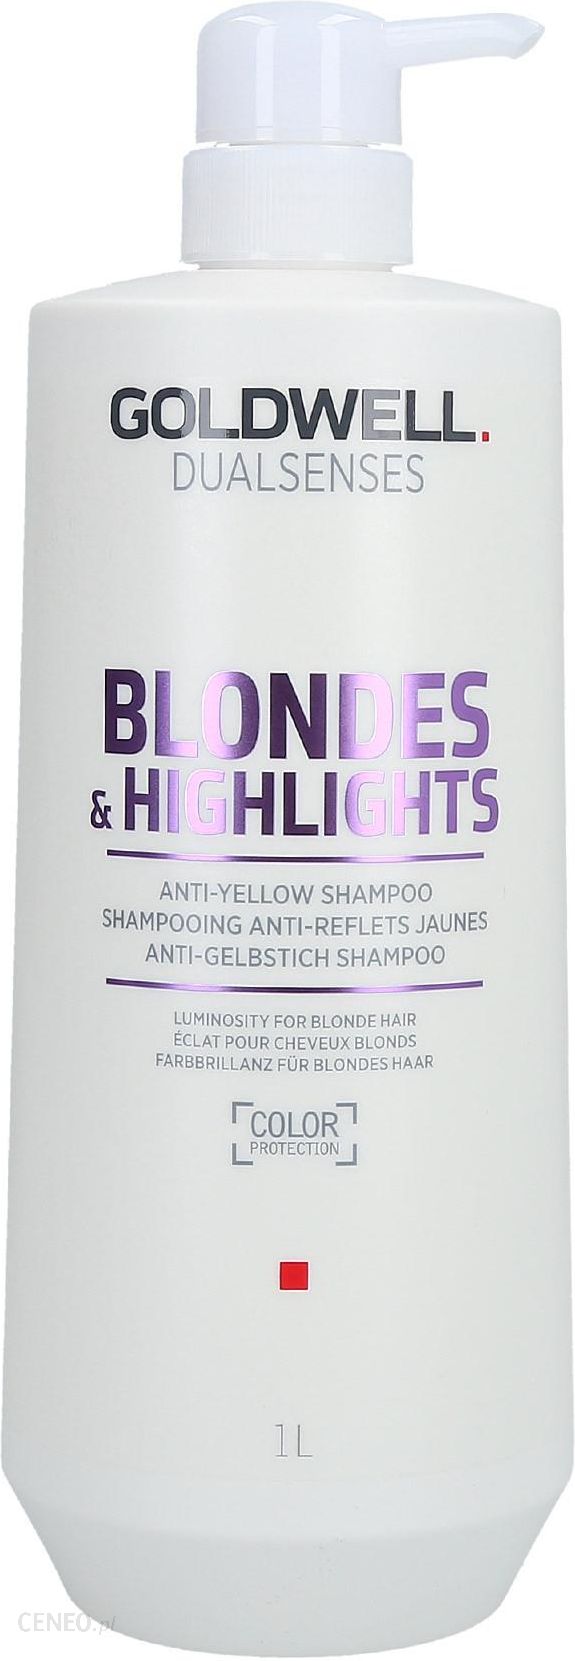 goldwell blondes & highlight szampon